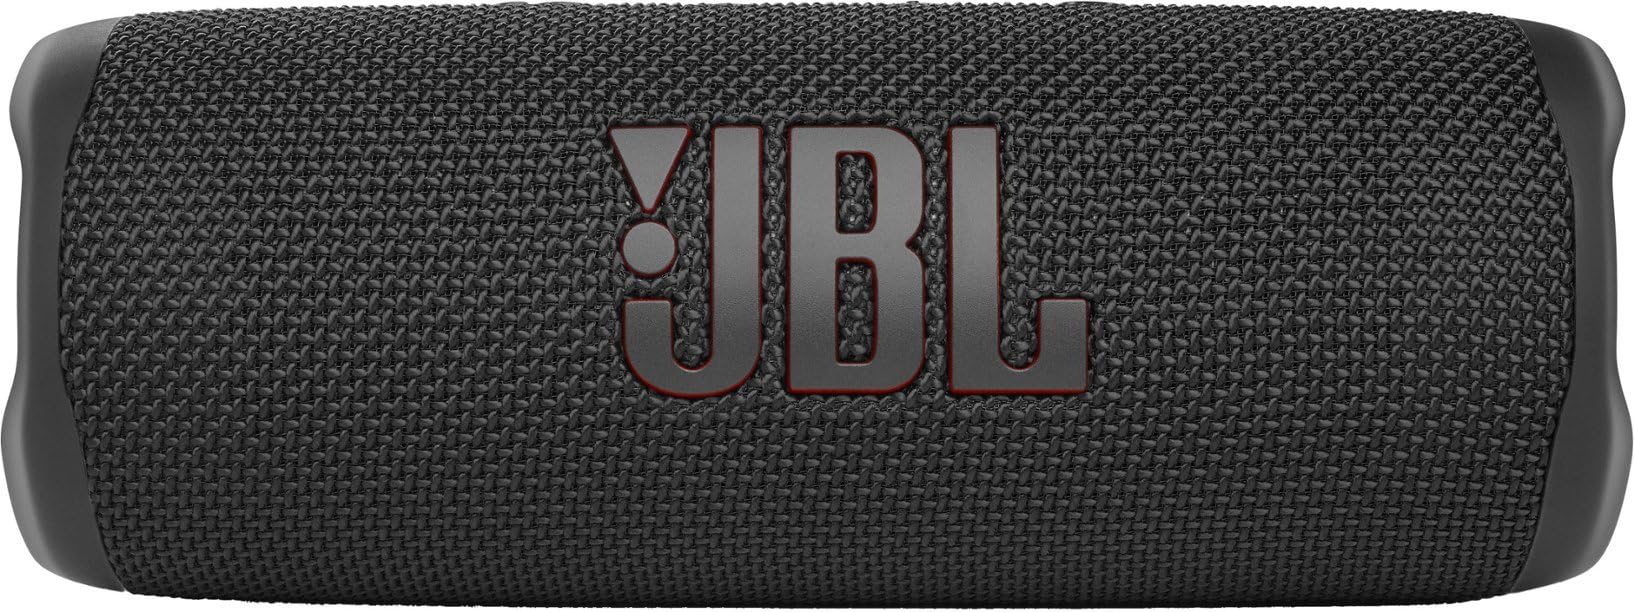 JBL Flip 6 - Portable Bluetooth Speaker, Powerful Sound and deep bass, IPX7 Waterproof, 12 Hours of Playtime- Black (Refurbished)